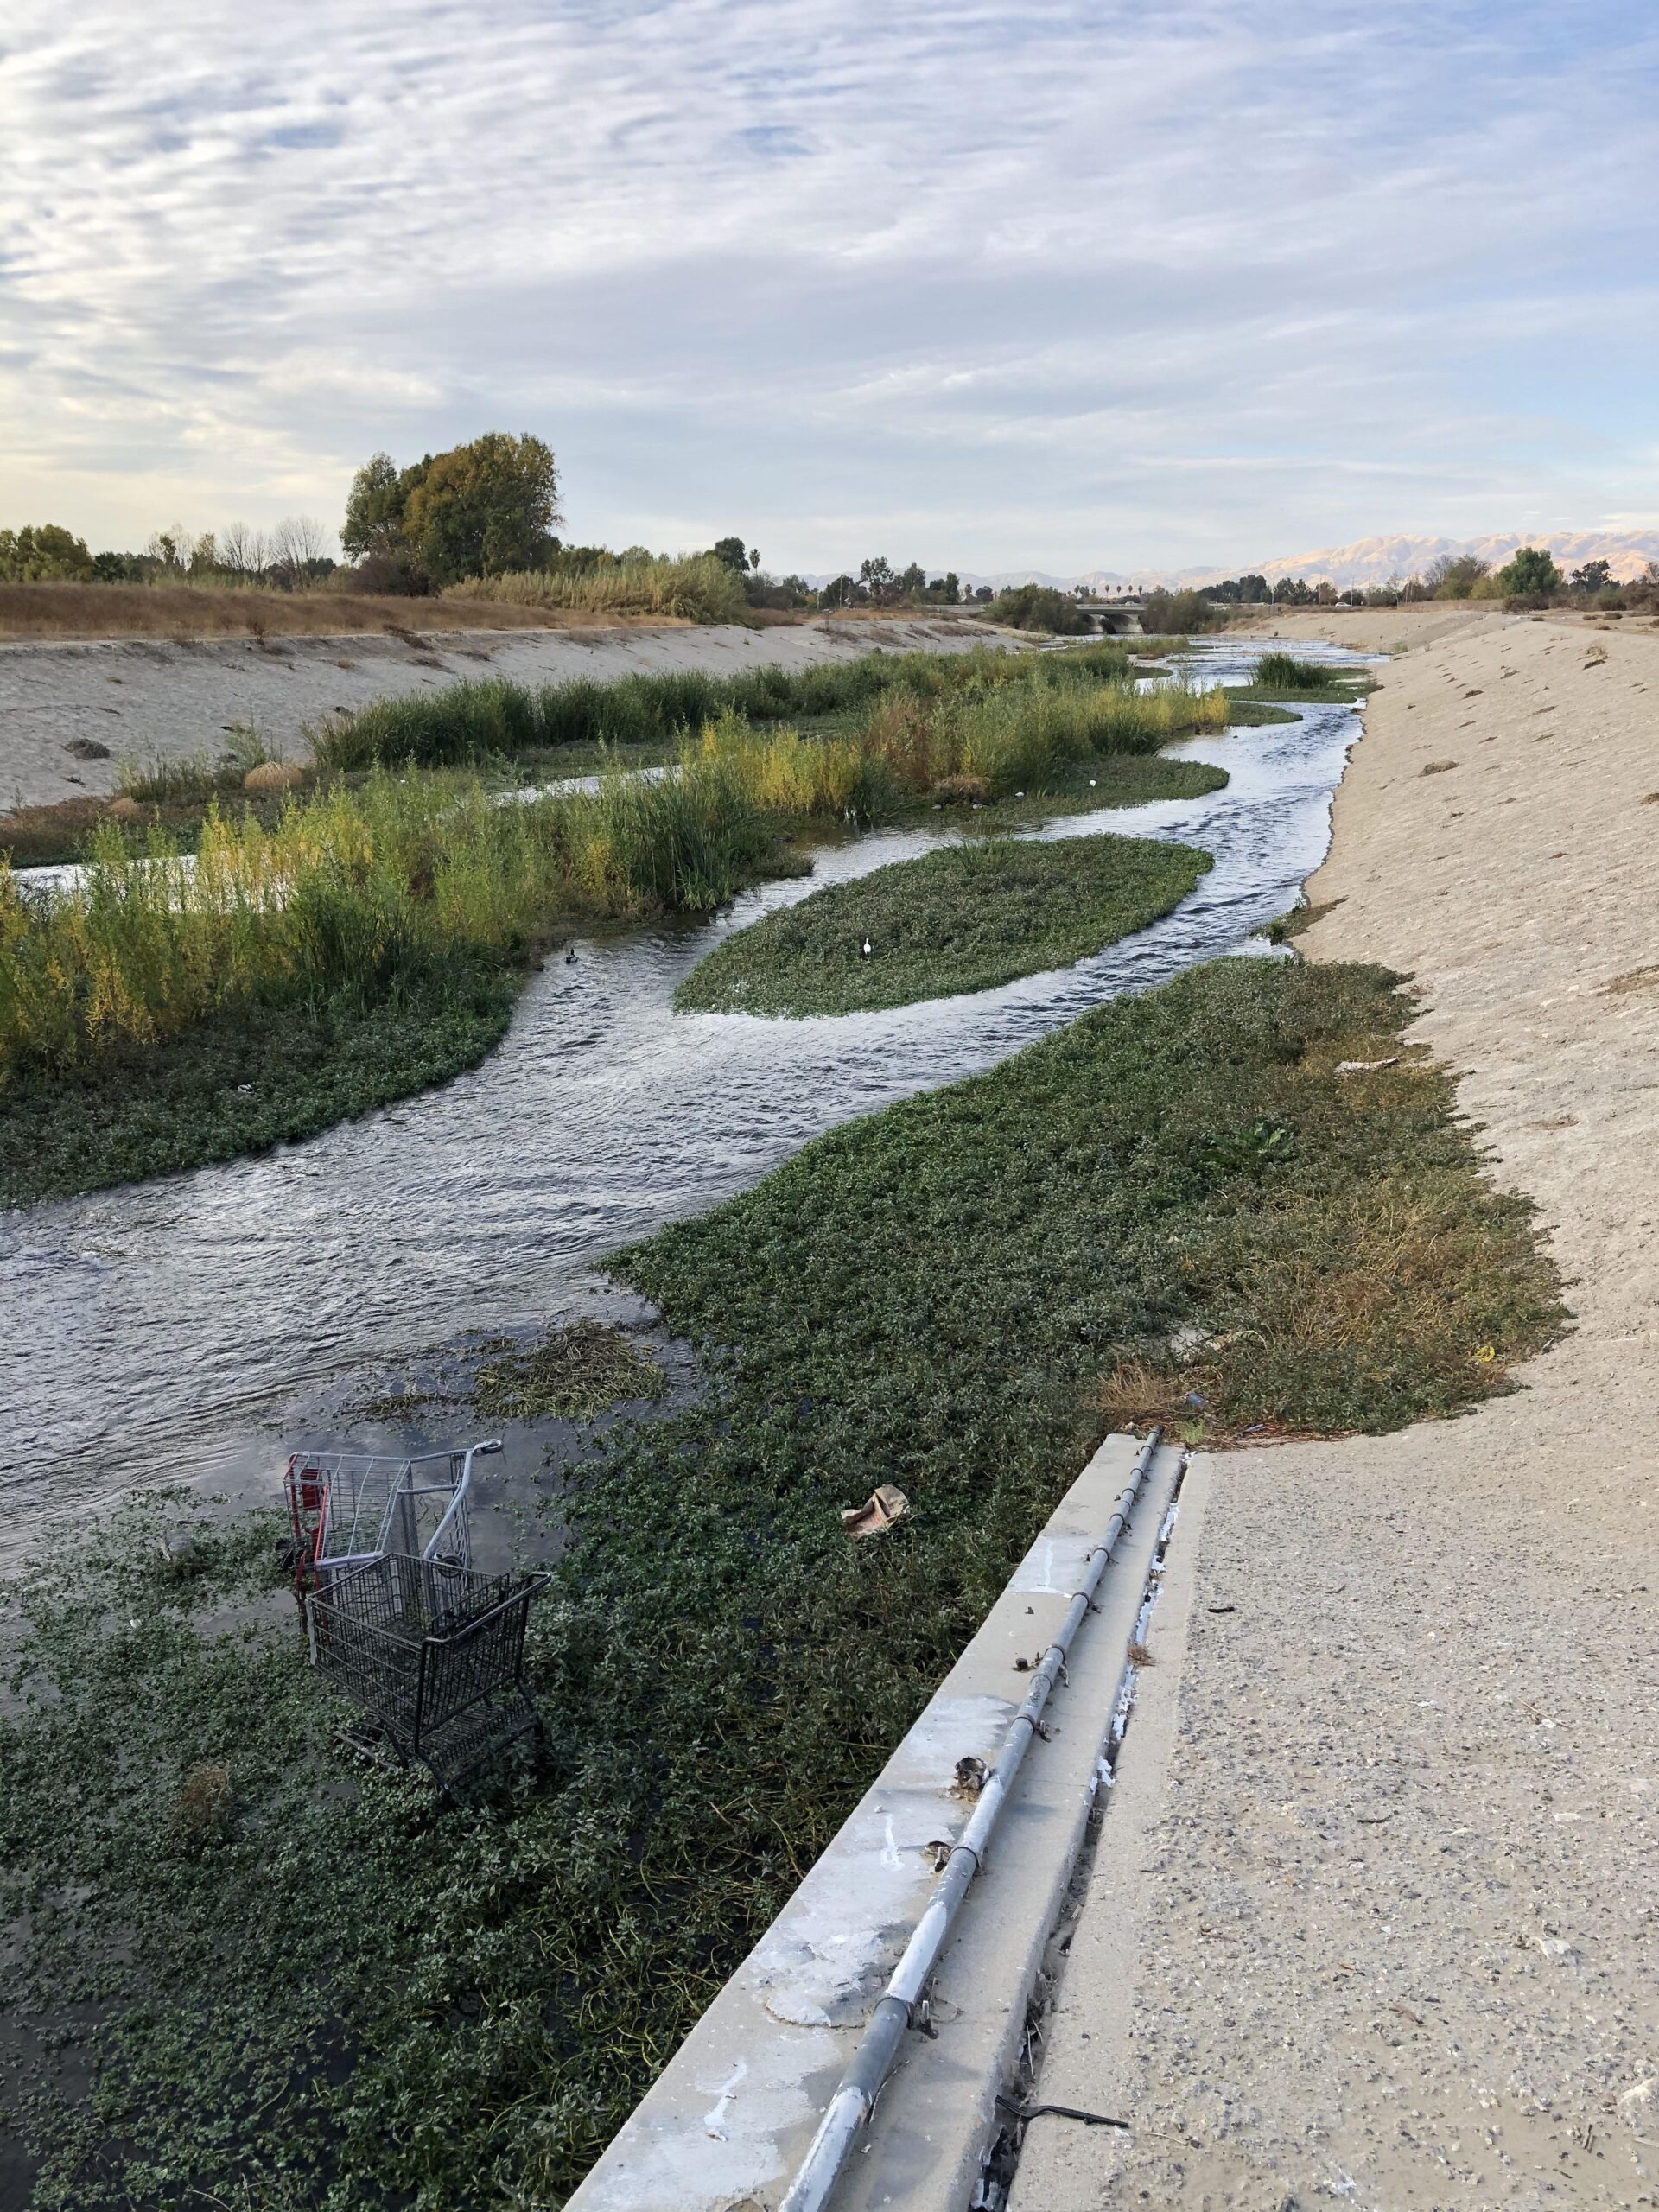 Restoration of Los Angeles River & Tributaries in Sepulveda Basin